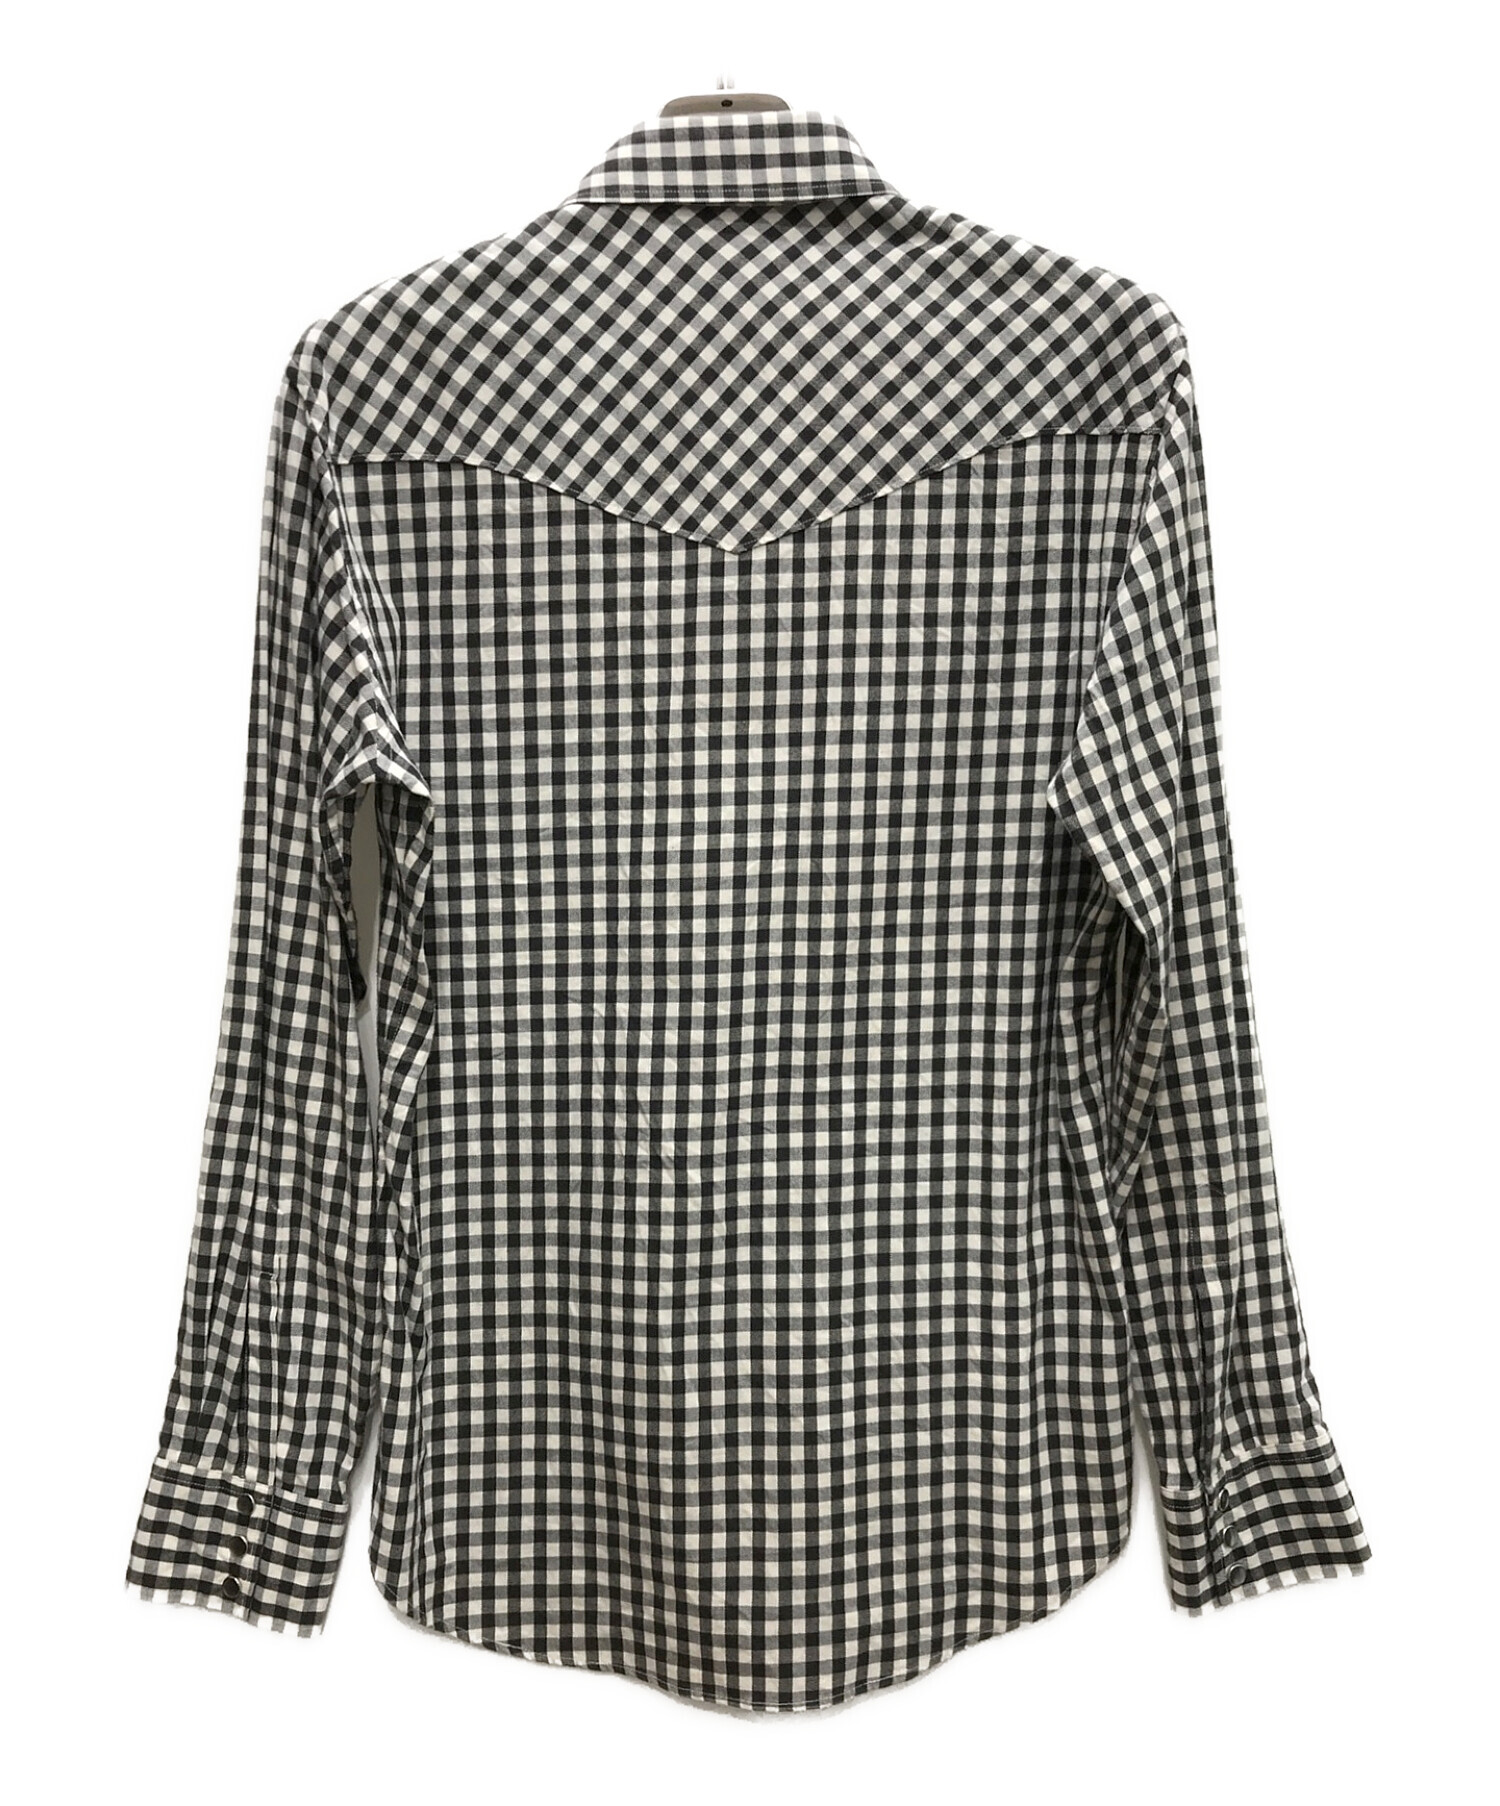 lucien pellat-finet (ルシアン・ペラフィネ) カシミヤ混チェックシャツ ホワイト×ブラック サイズ:M